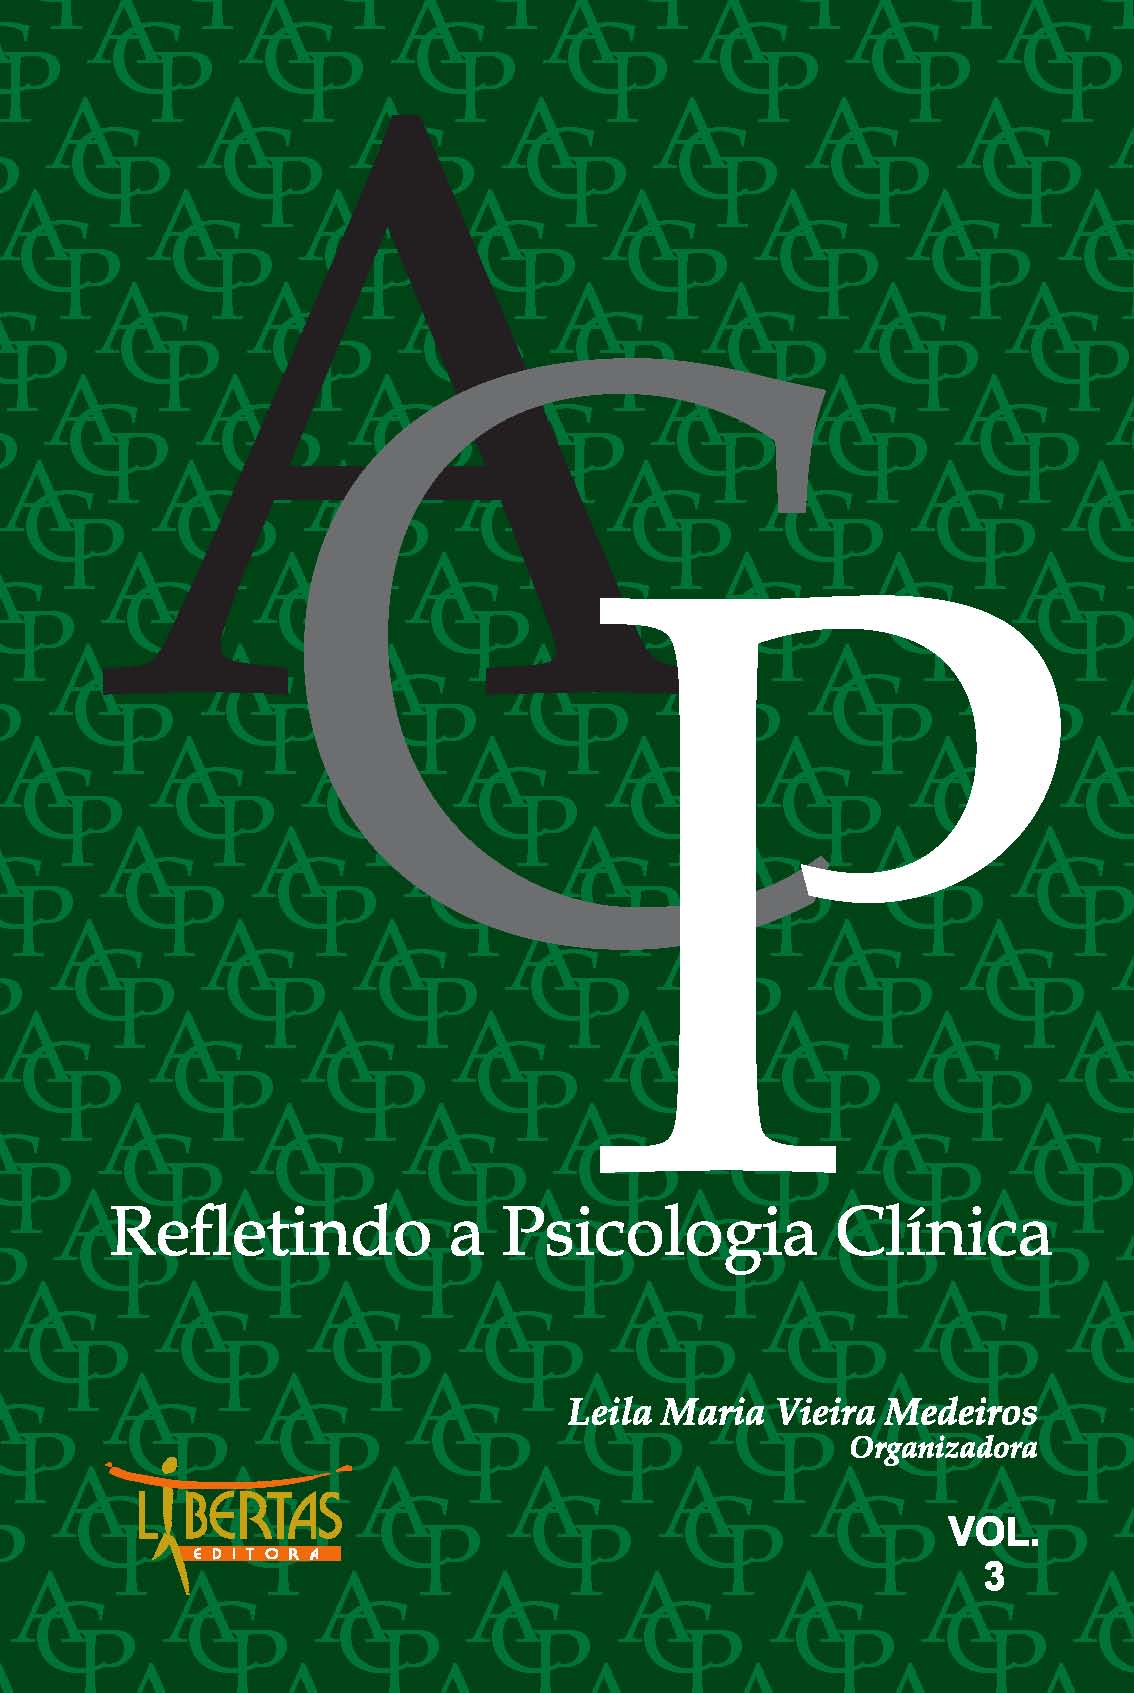 ACP Refletindo a Psicologia Clínica – Vol. 3 – Libertas Editora